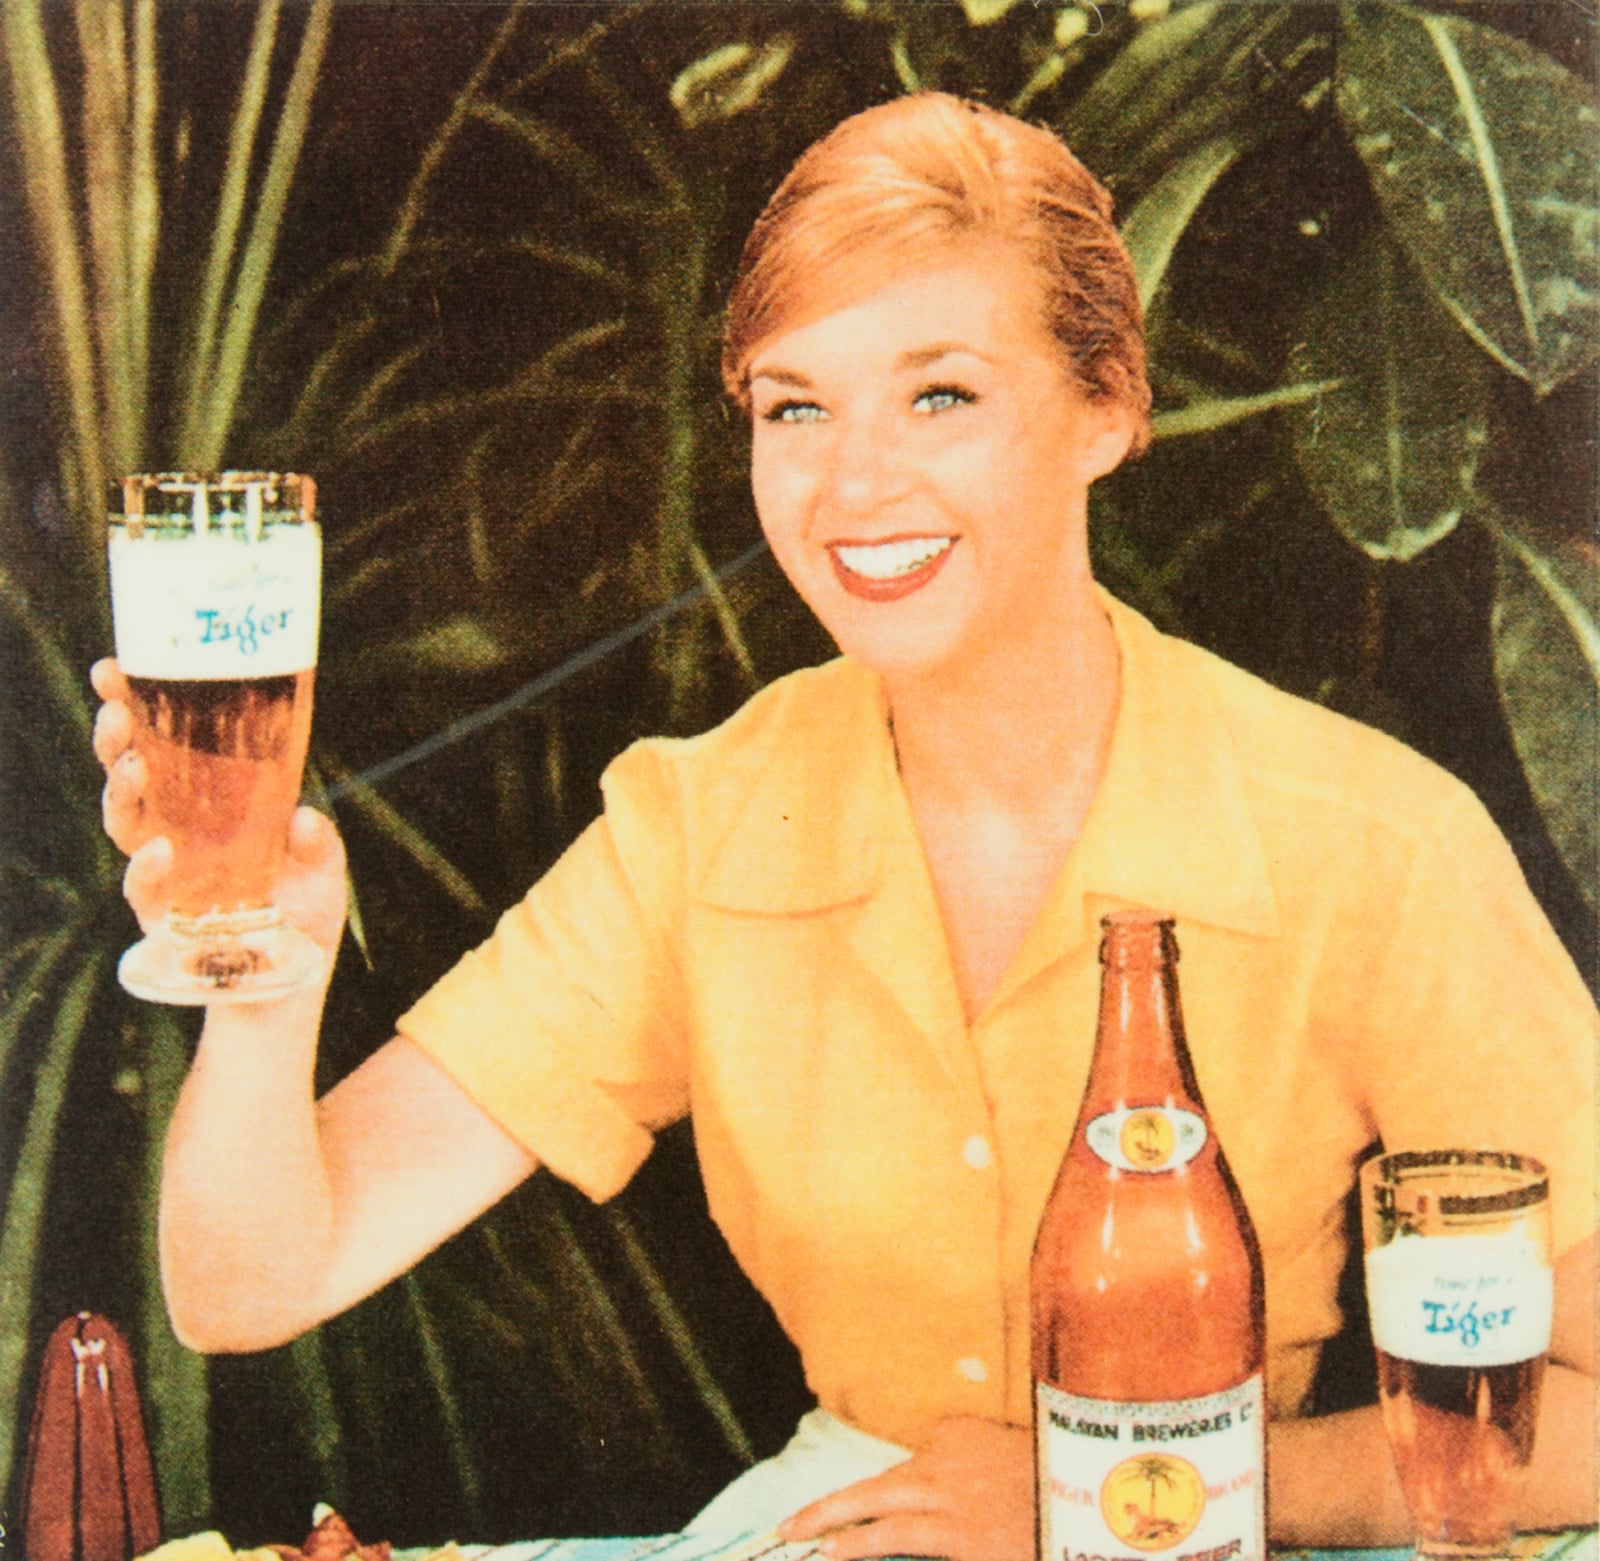 Western Woman Tiger Beer Advertisement